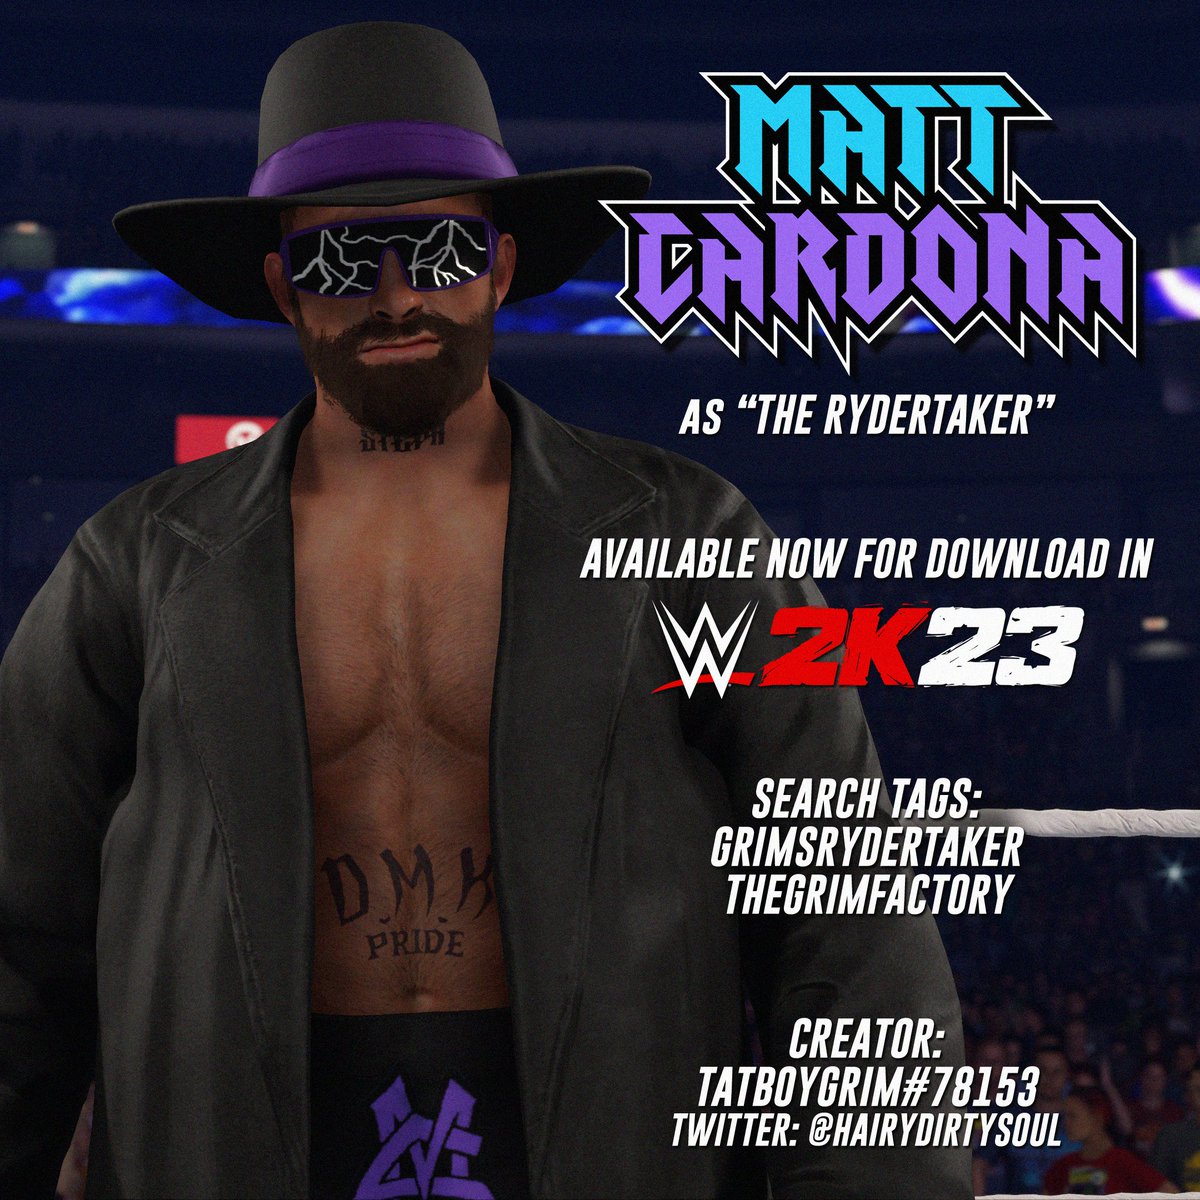 Zack Ryder will Rest... In... Peace...

MATT CARDONA is now available for download in #WWE2K23!

Includes:
• Matt Cardona's 'Rydertaker' attire
• Menu screen render/graphic
• Custom moveset*

Enjoy!

@TheMattCardona